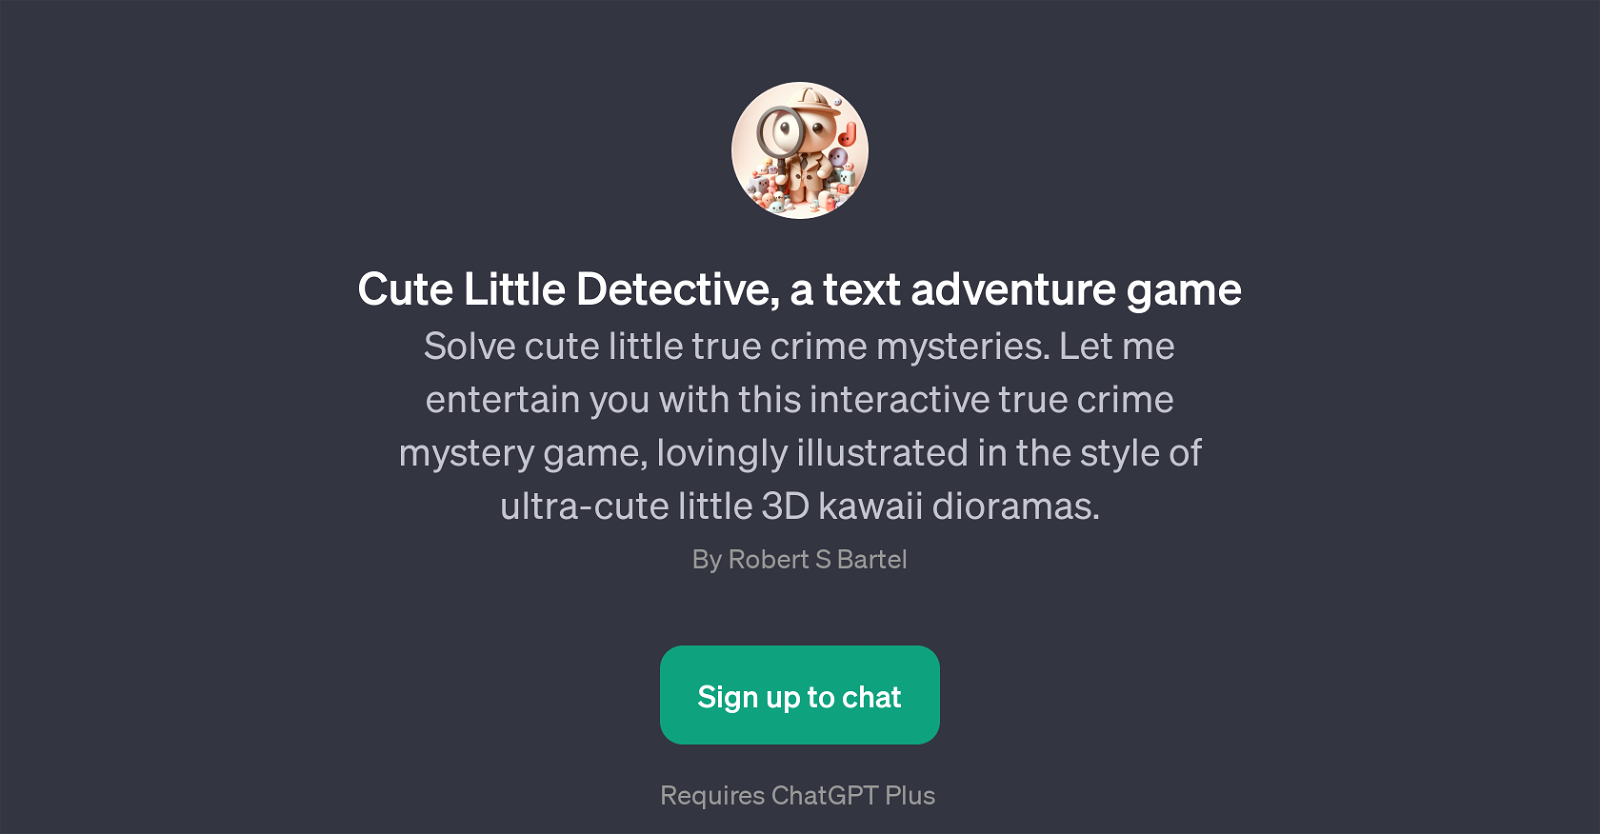 Cute Little Detective website